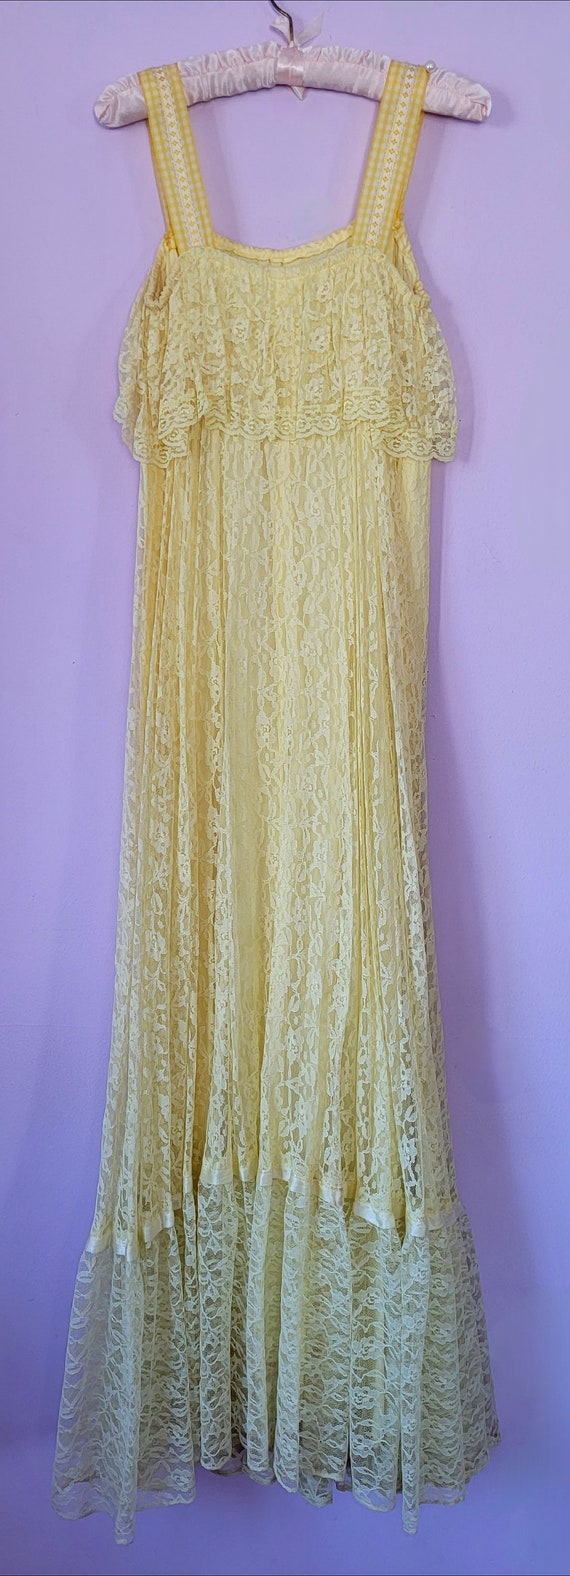 Handmade Vintage 1960s Lace Maxi Dress - image 7